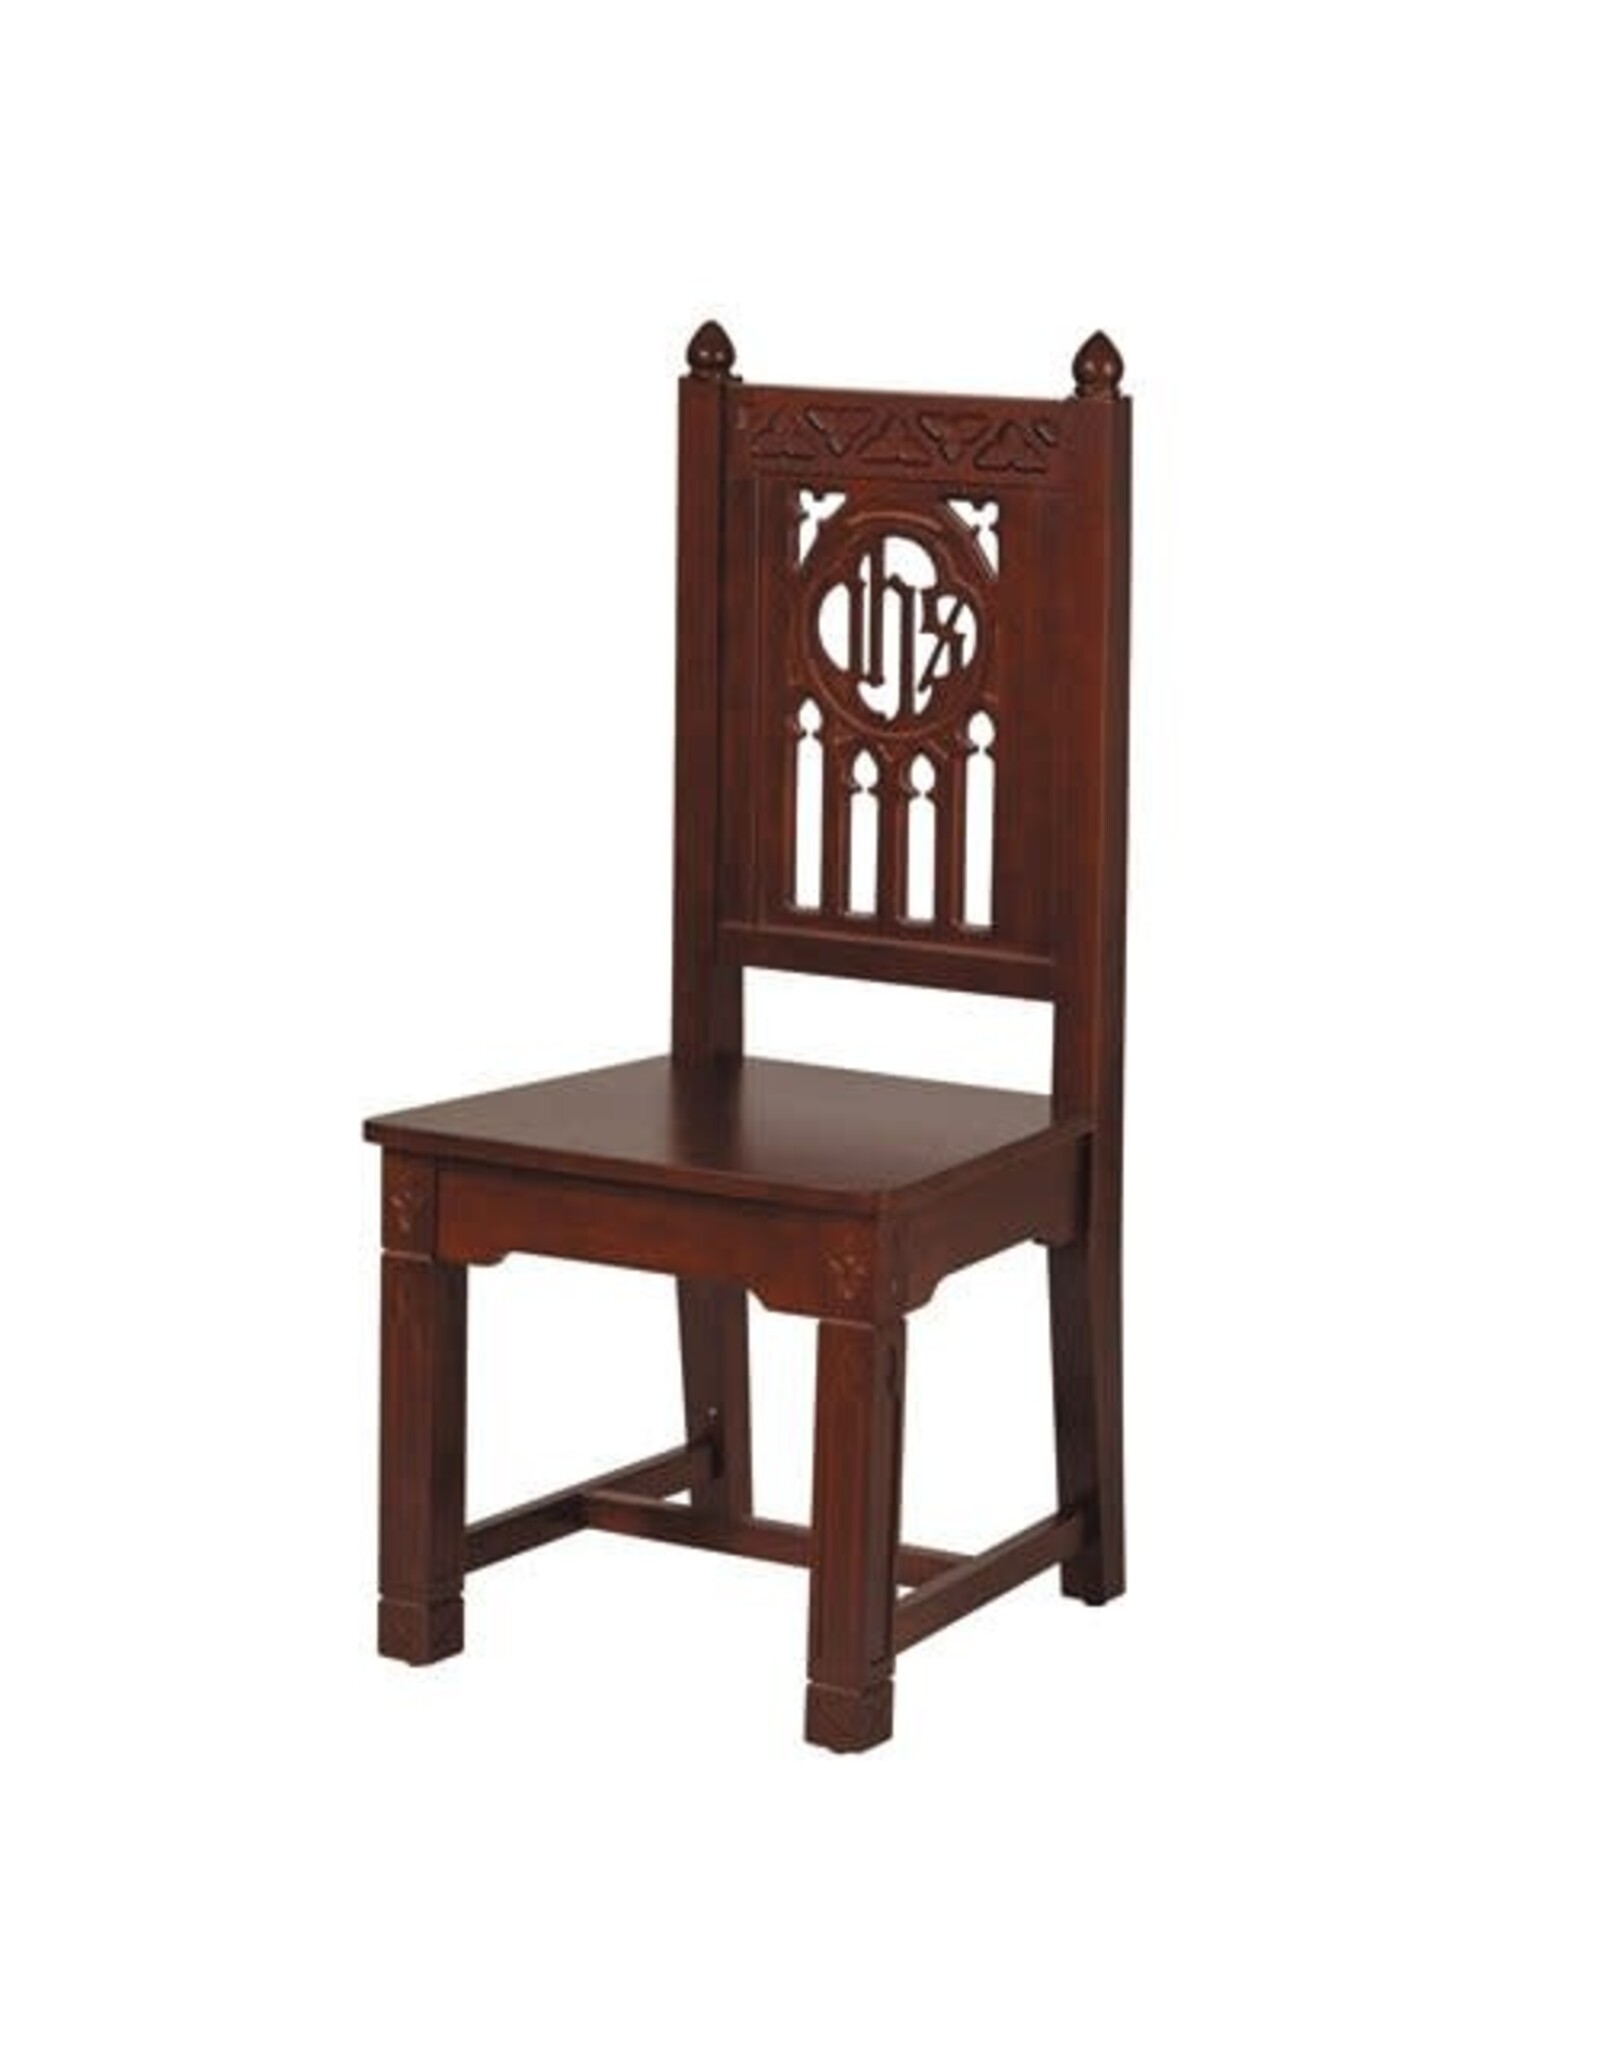 Robert Smith Side Chair - Florentine Collection (Walnut)